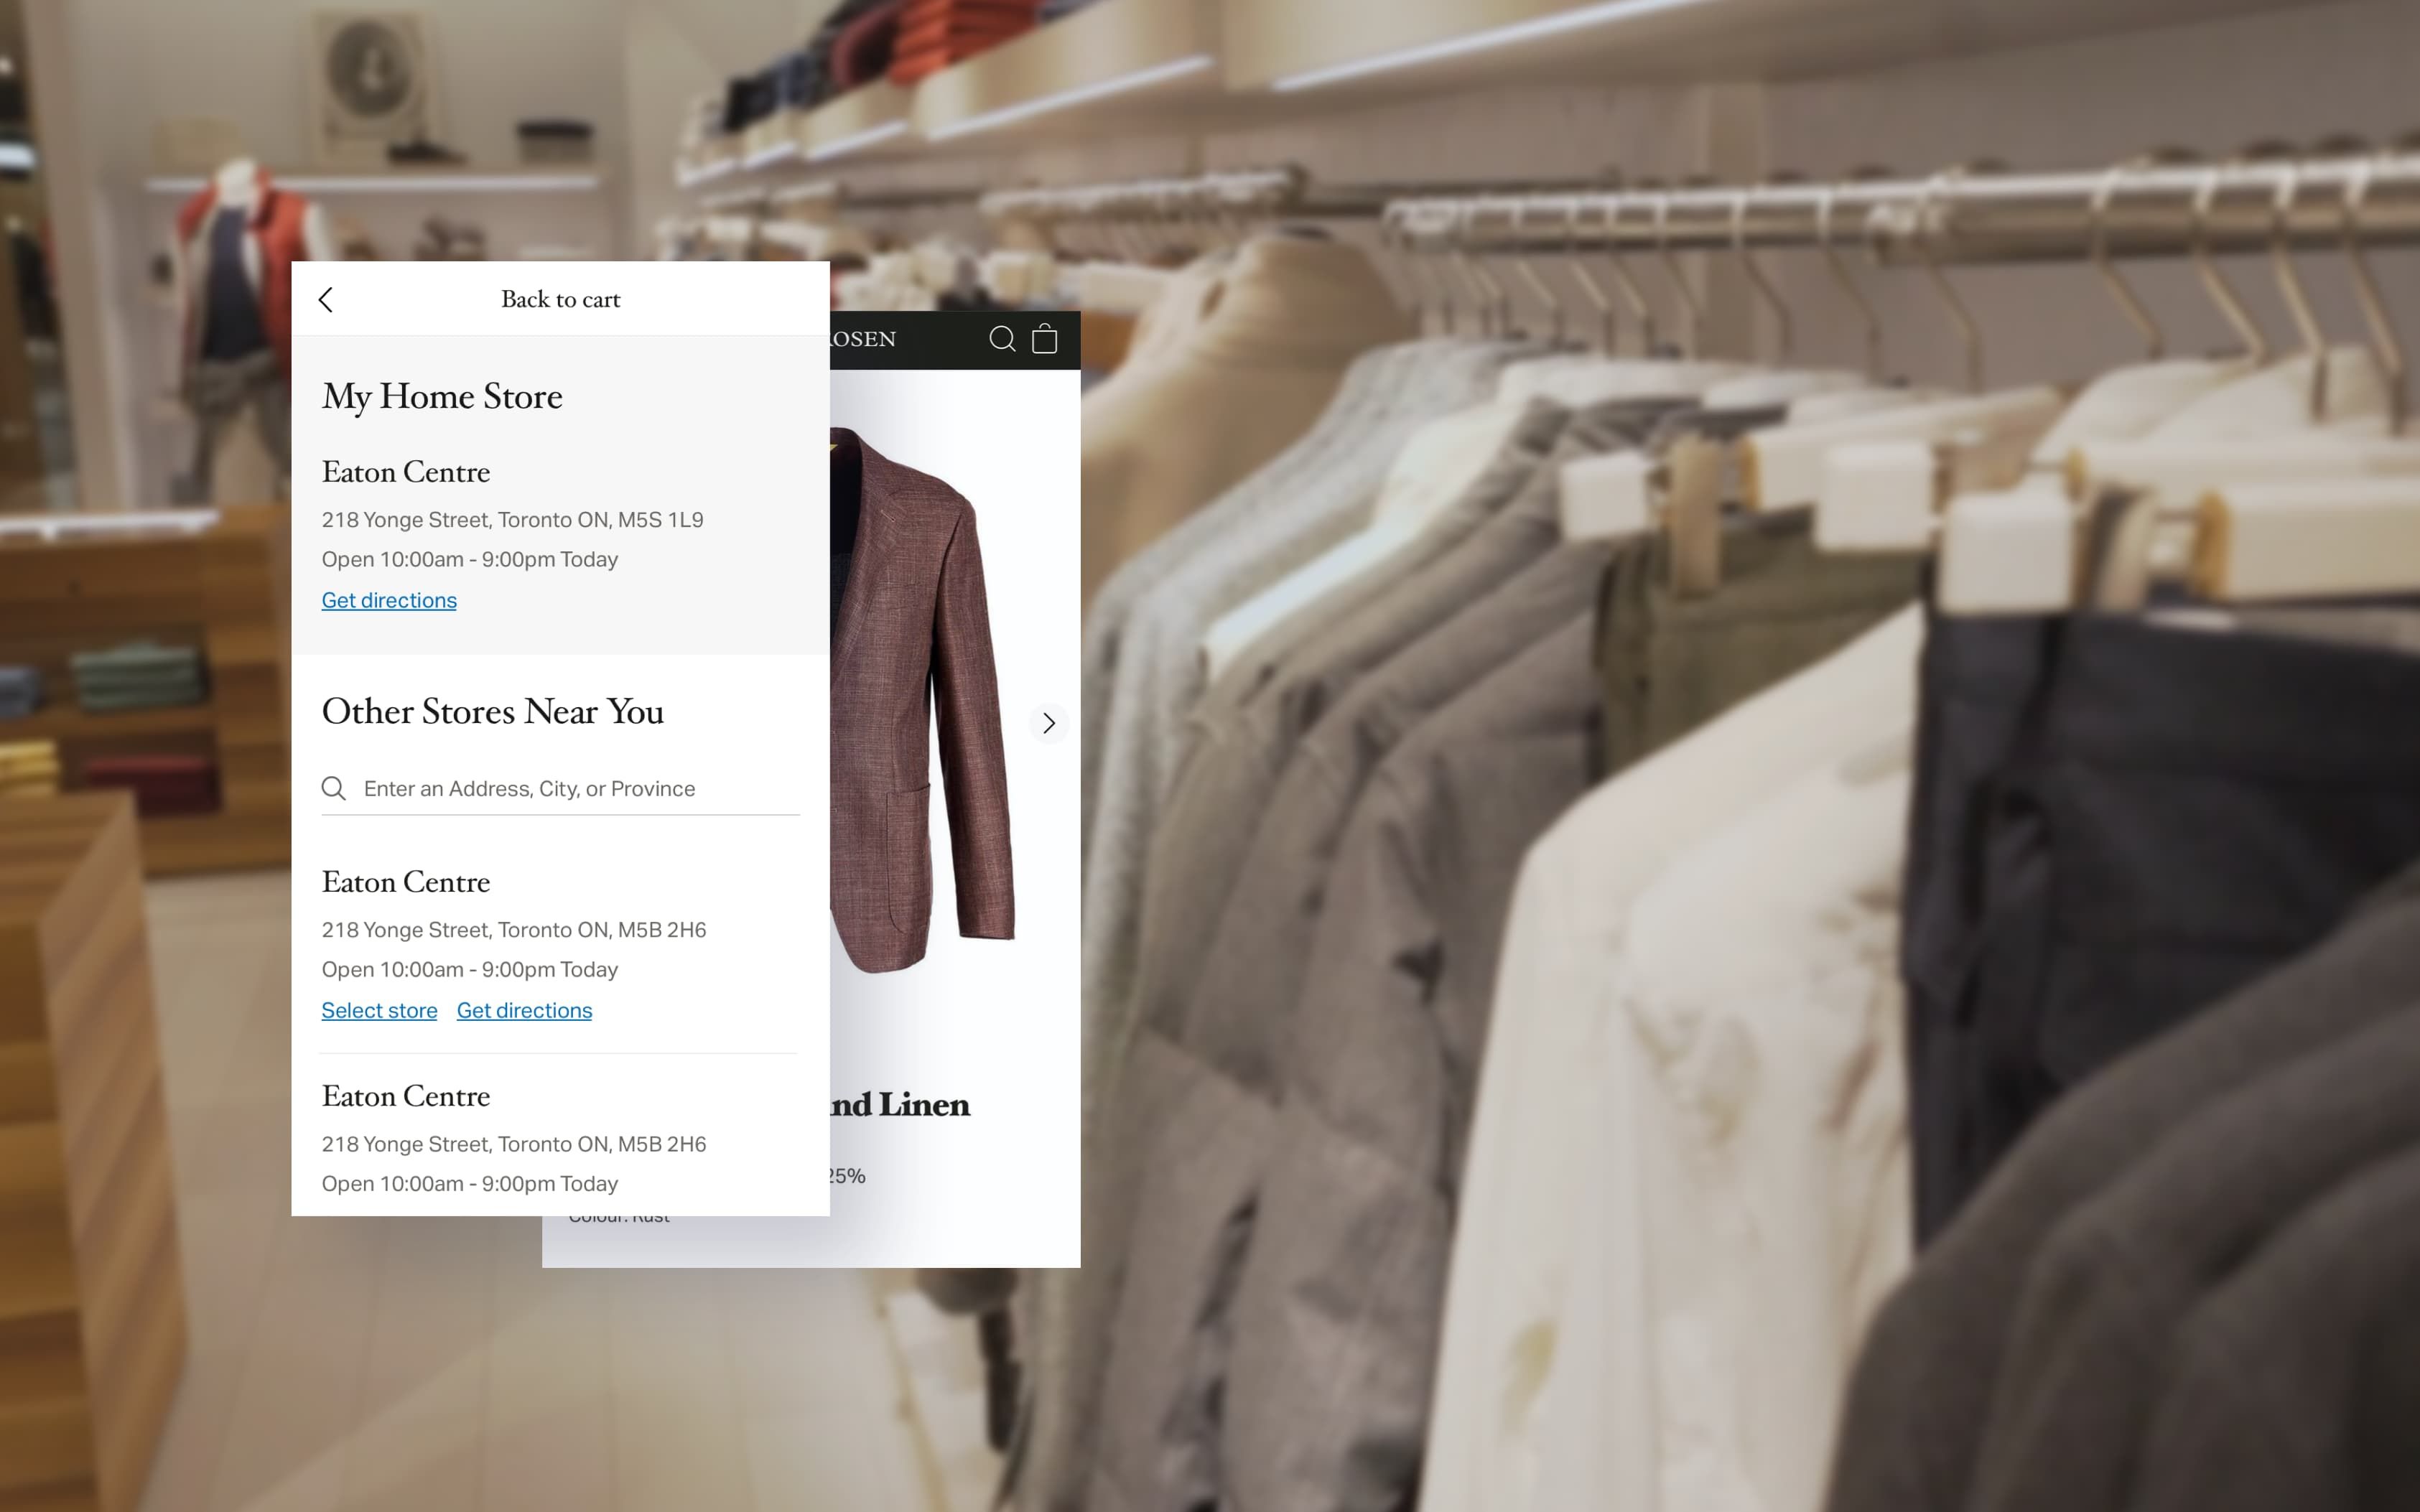 Screenshots of the Harry Rosen digital platform imposed over a blurred image of menswear clothing racks.